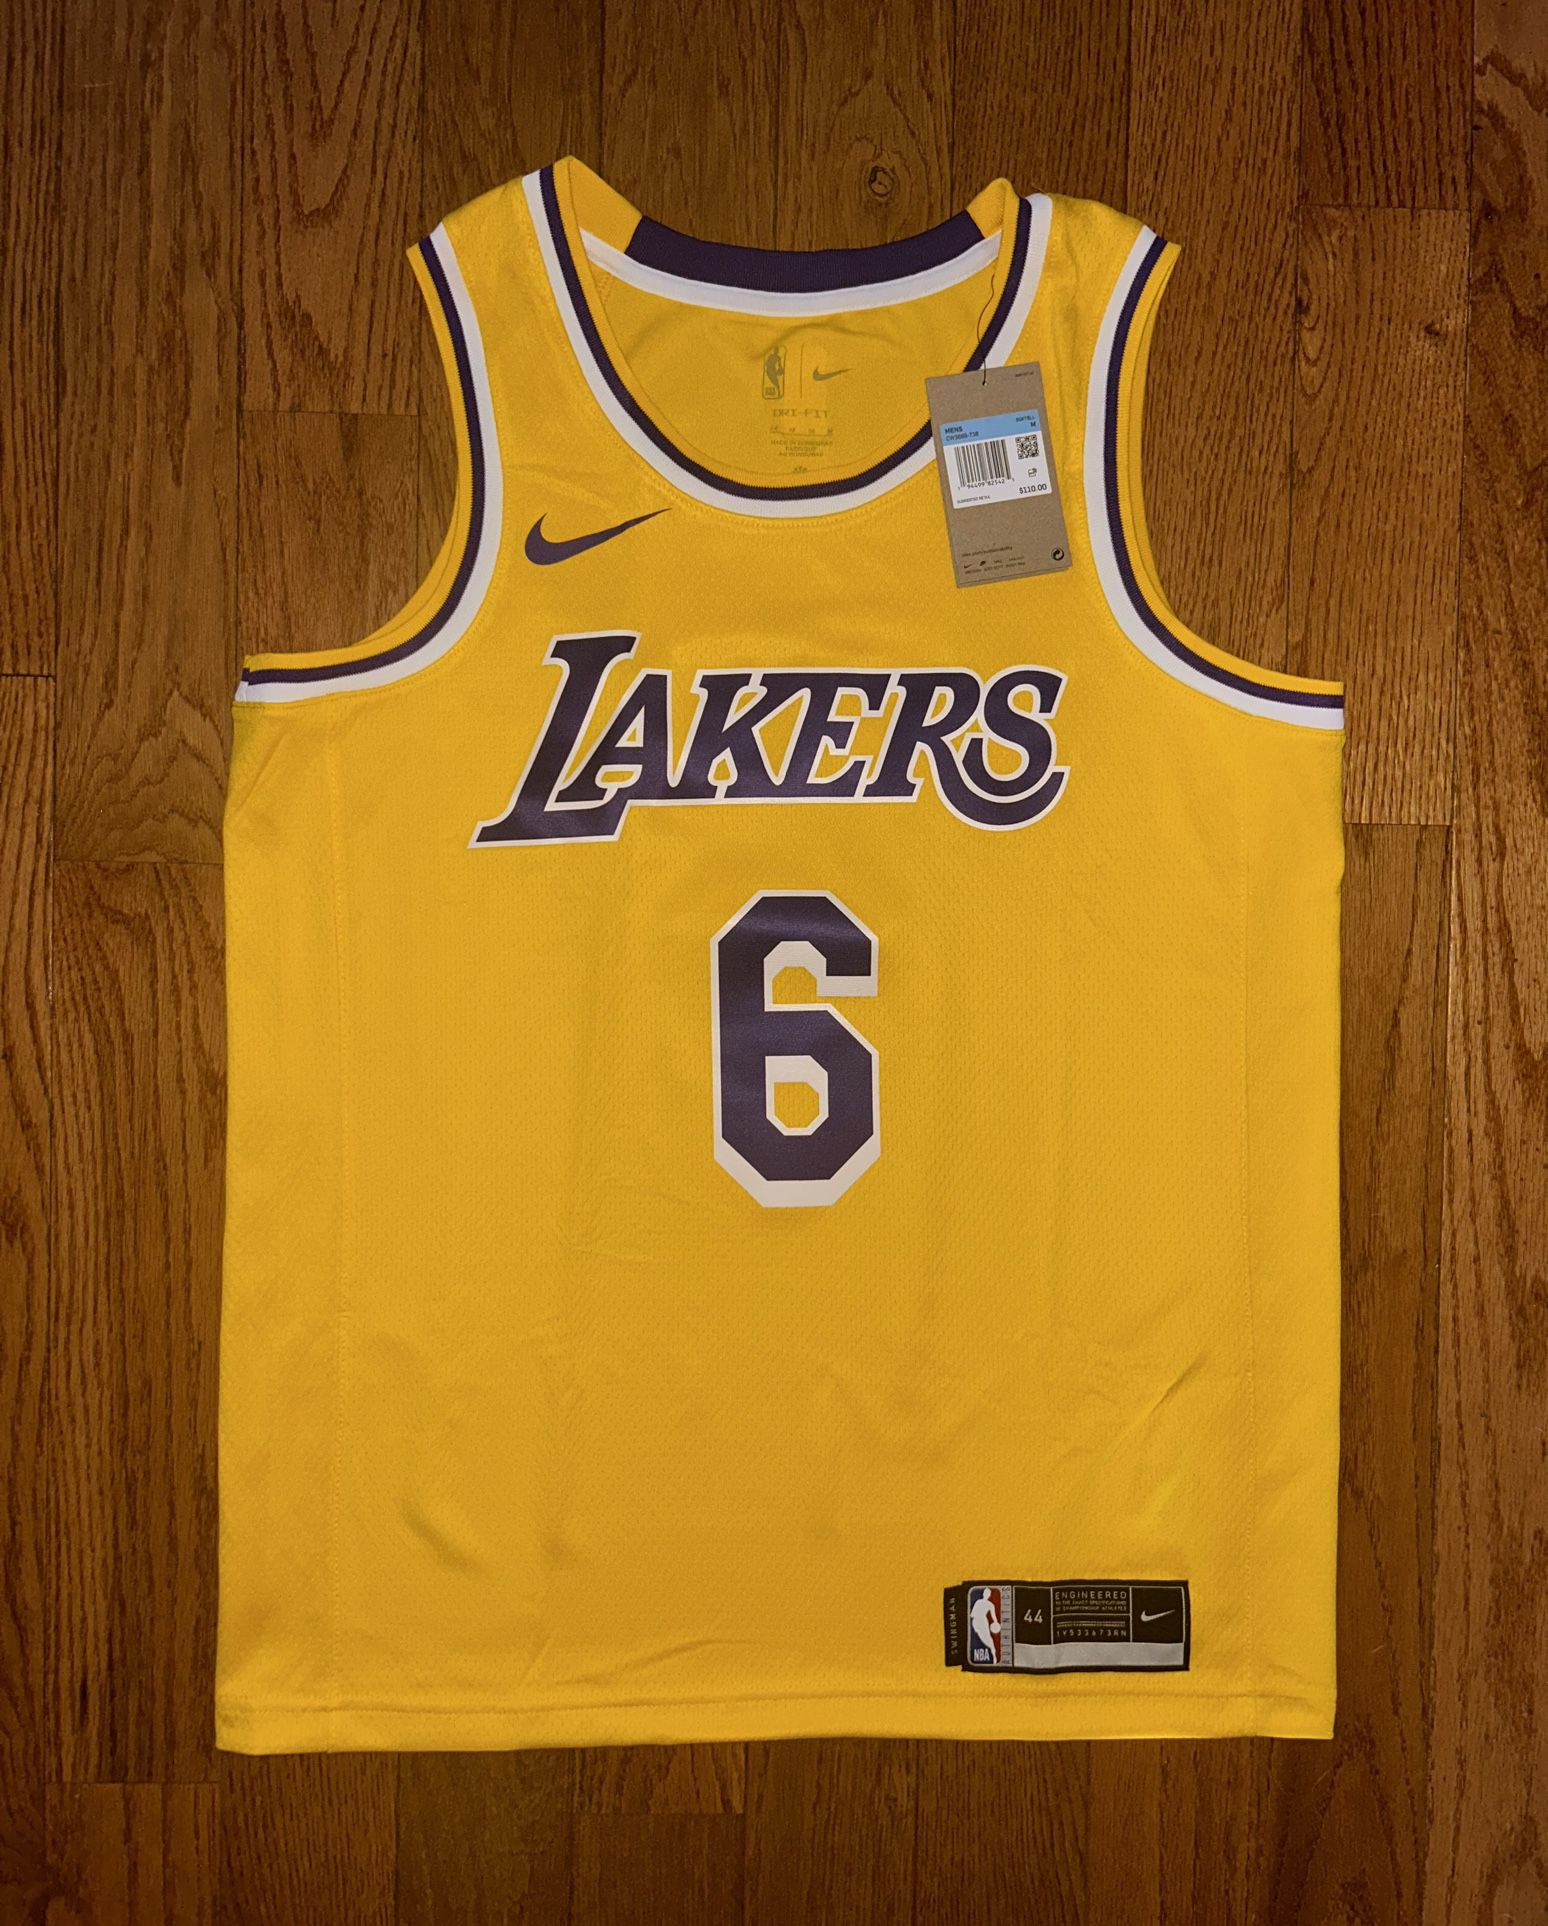 LeBron James Los Angeles Lakers Icon Edition Nike Swingman Jersey Size 44/Medium NEW